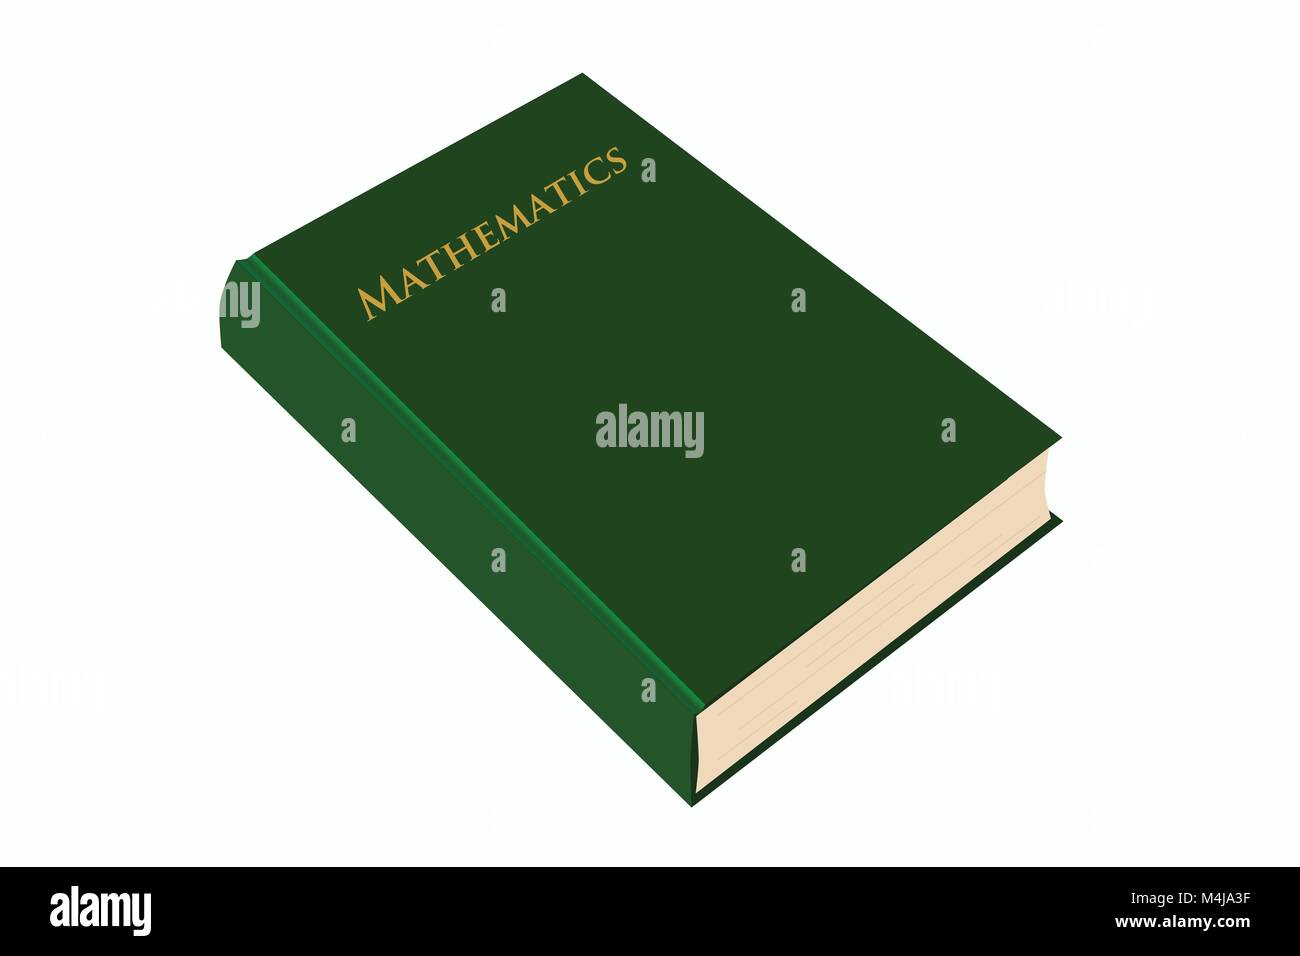 Abbildung: Mathematik Bücher, Vektor der Mathematik Buch/Buch/text Buch für Mathe/Studien, Symbol für Mathematik Klasse, Symbol für Wissenschaft, Bildung, Stock Vektor